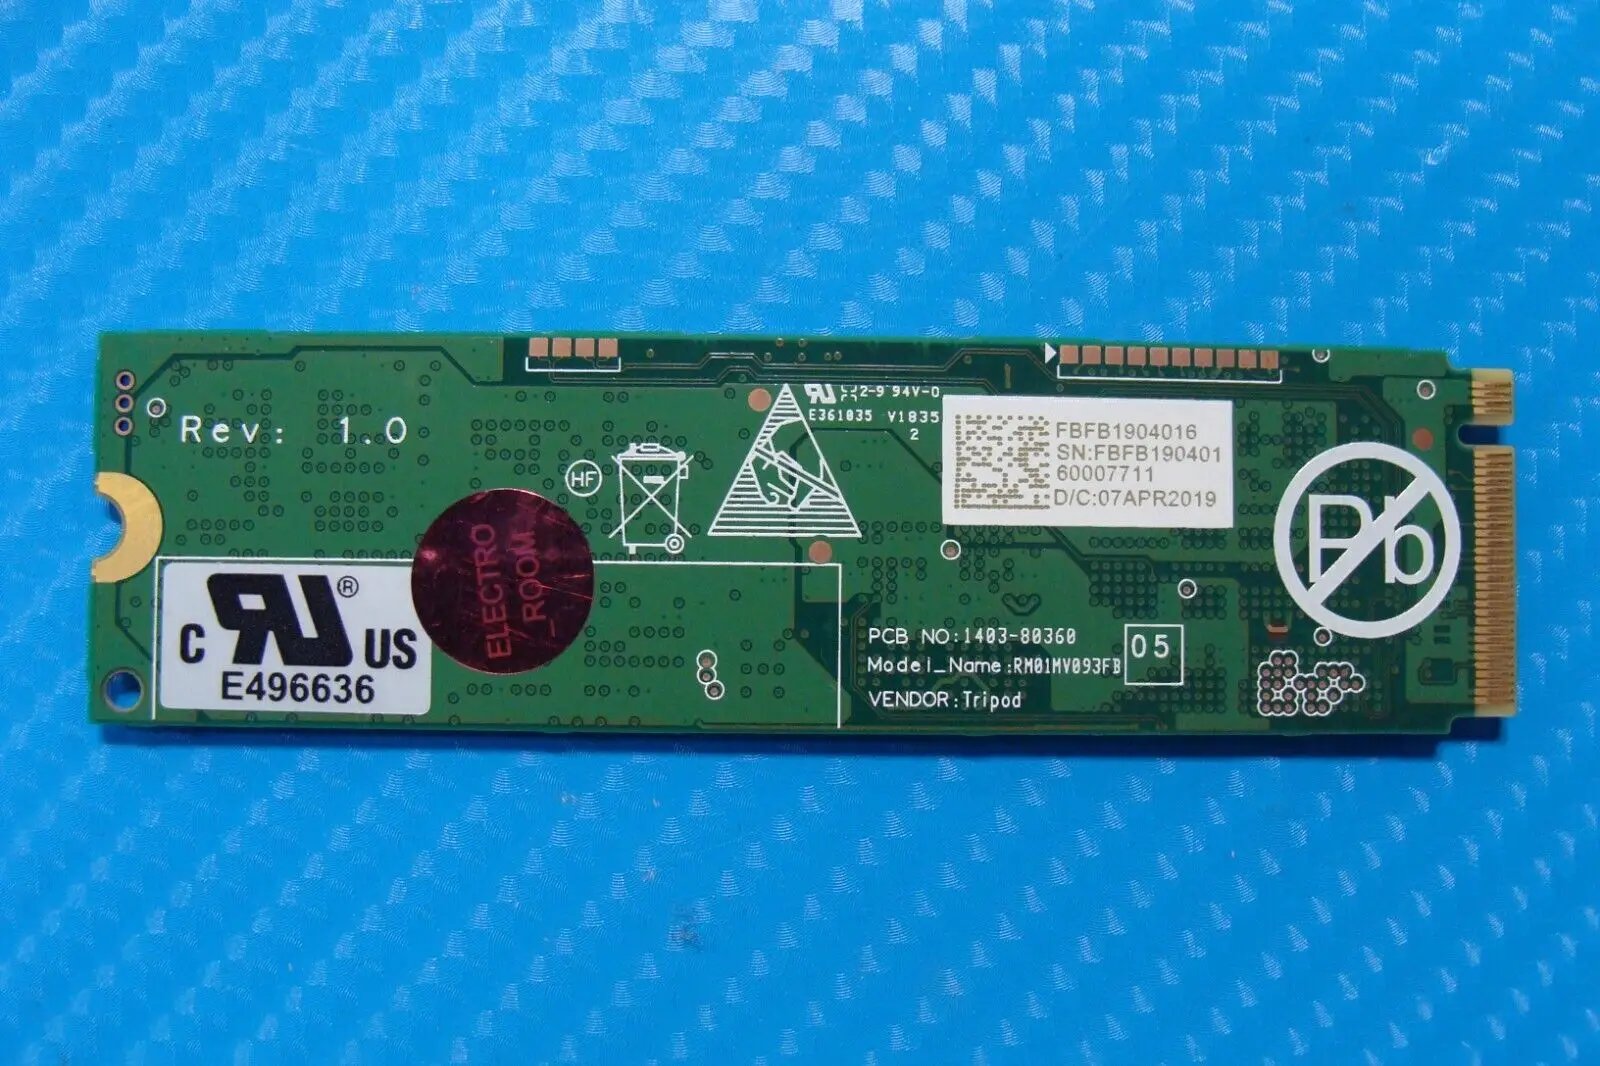 Lenovo X380 Yoga Union Memory 256GB NVMe M.2 SSD Solid State Drive SSS0L25132